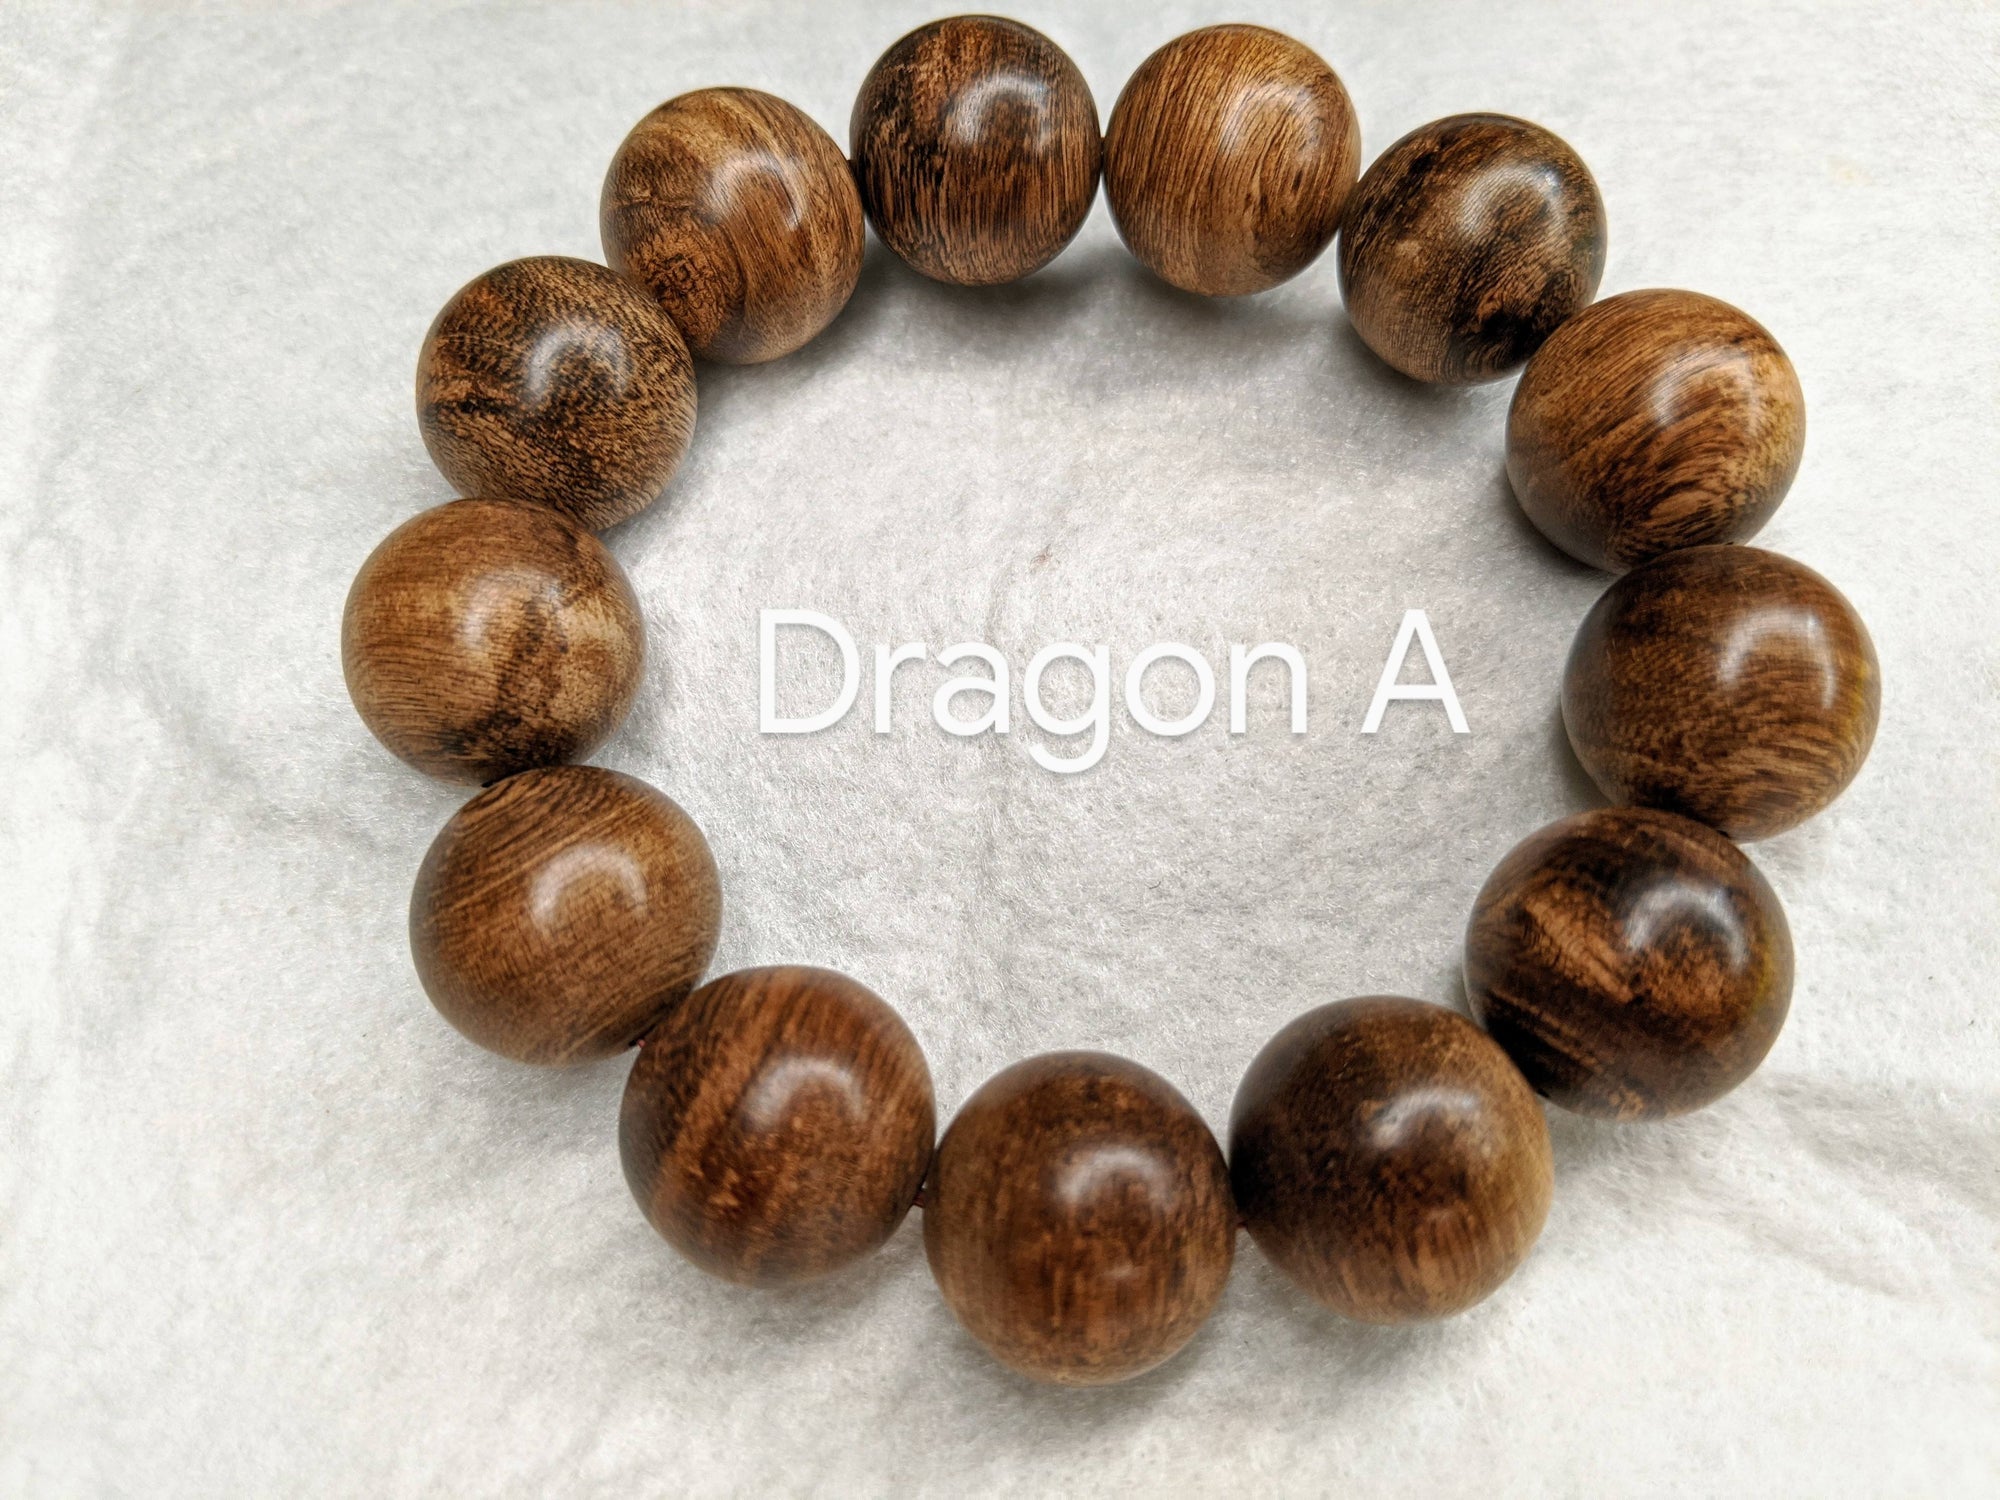 Double Dragon SL Wild Agarwood Bracelet 13 beads 18mm 29g - Dragon A